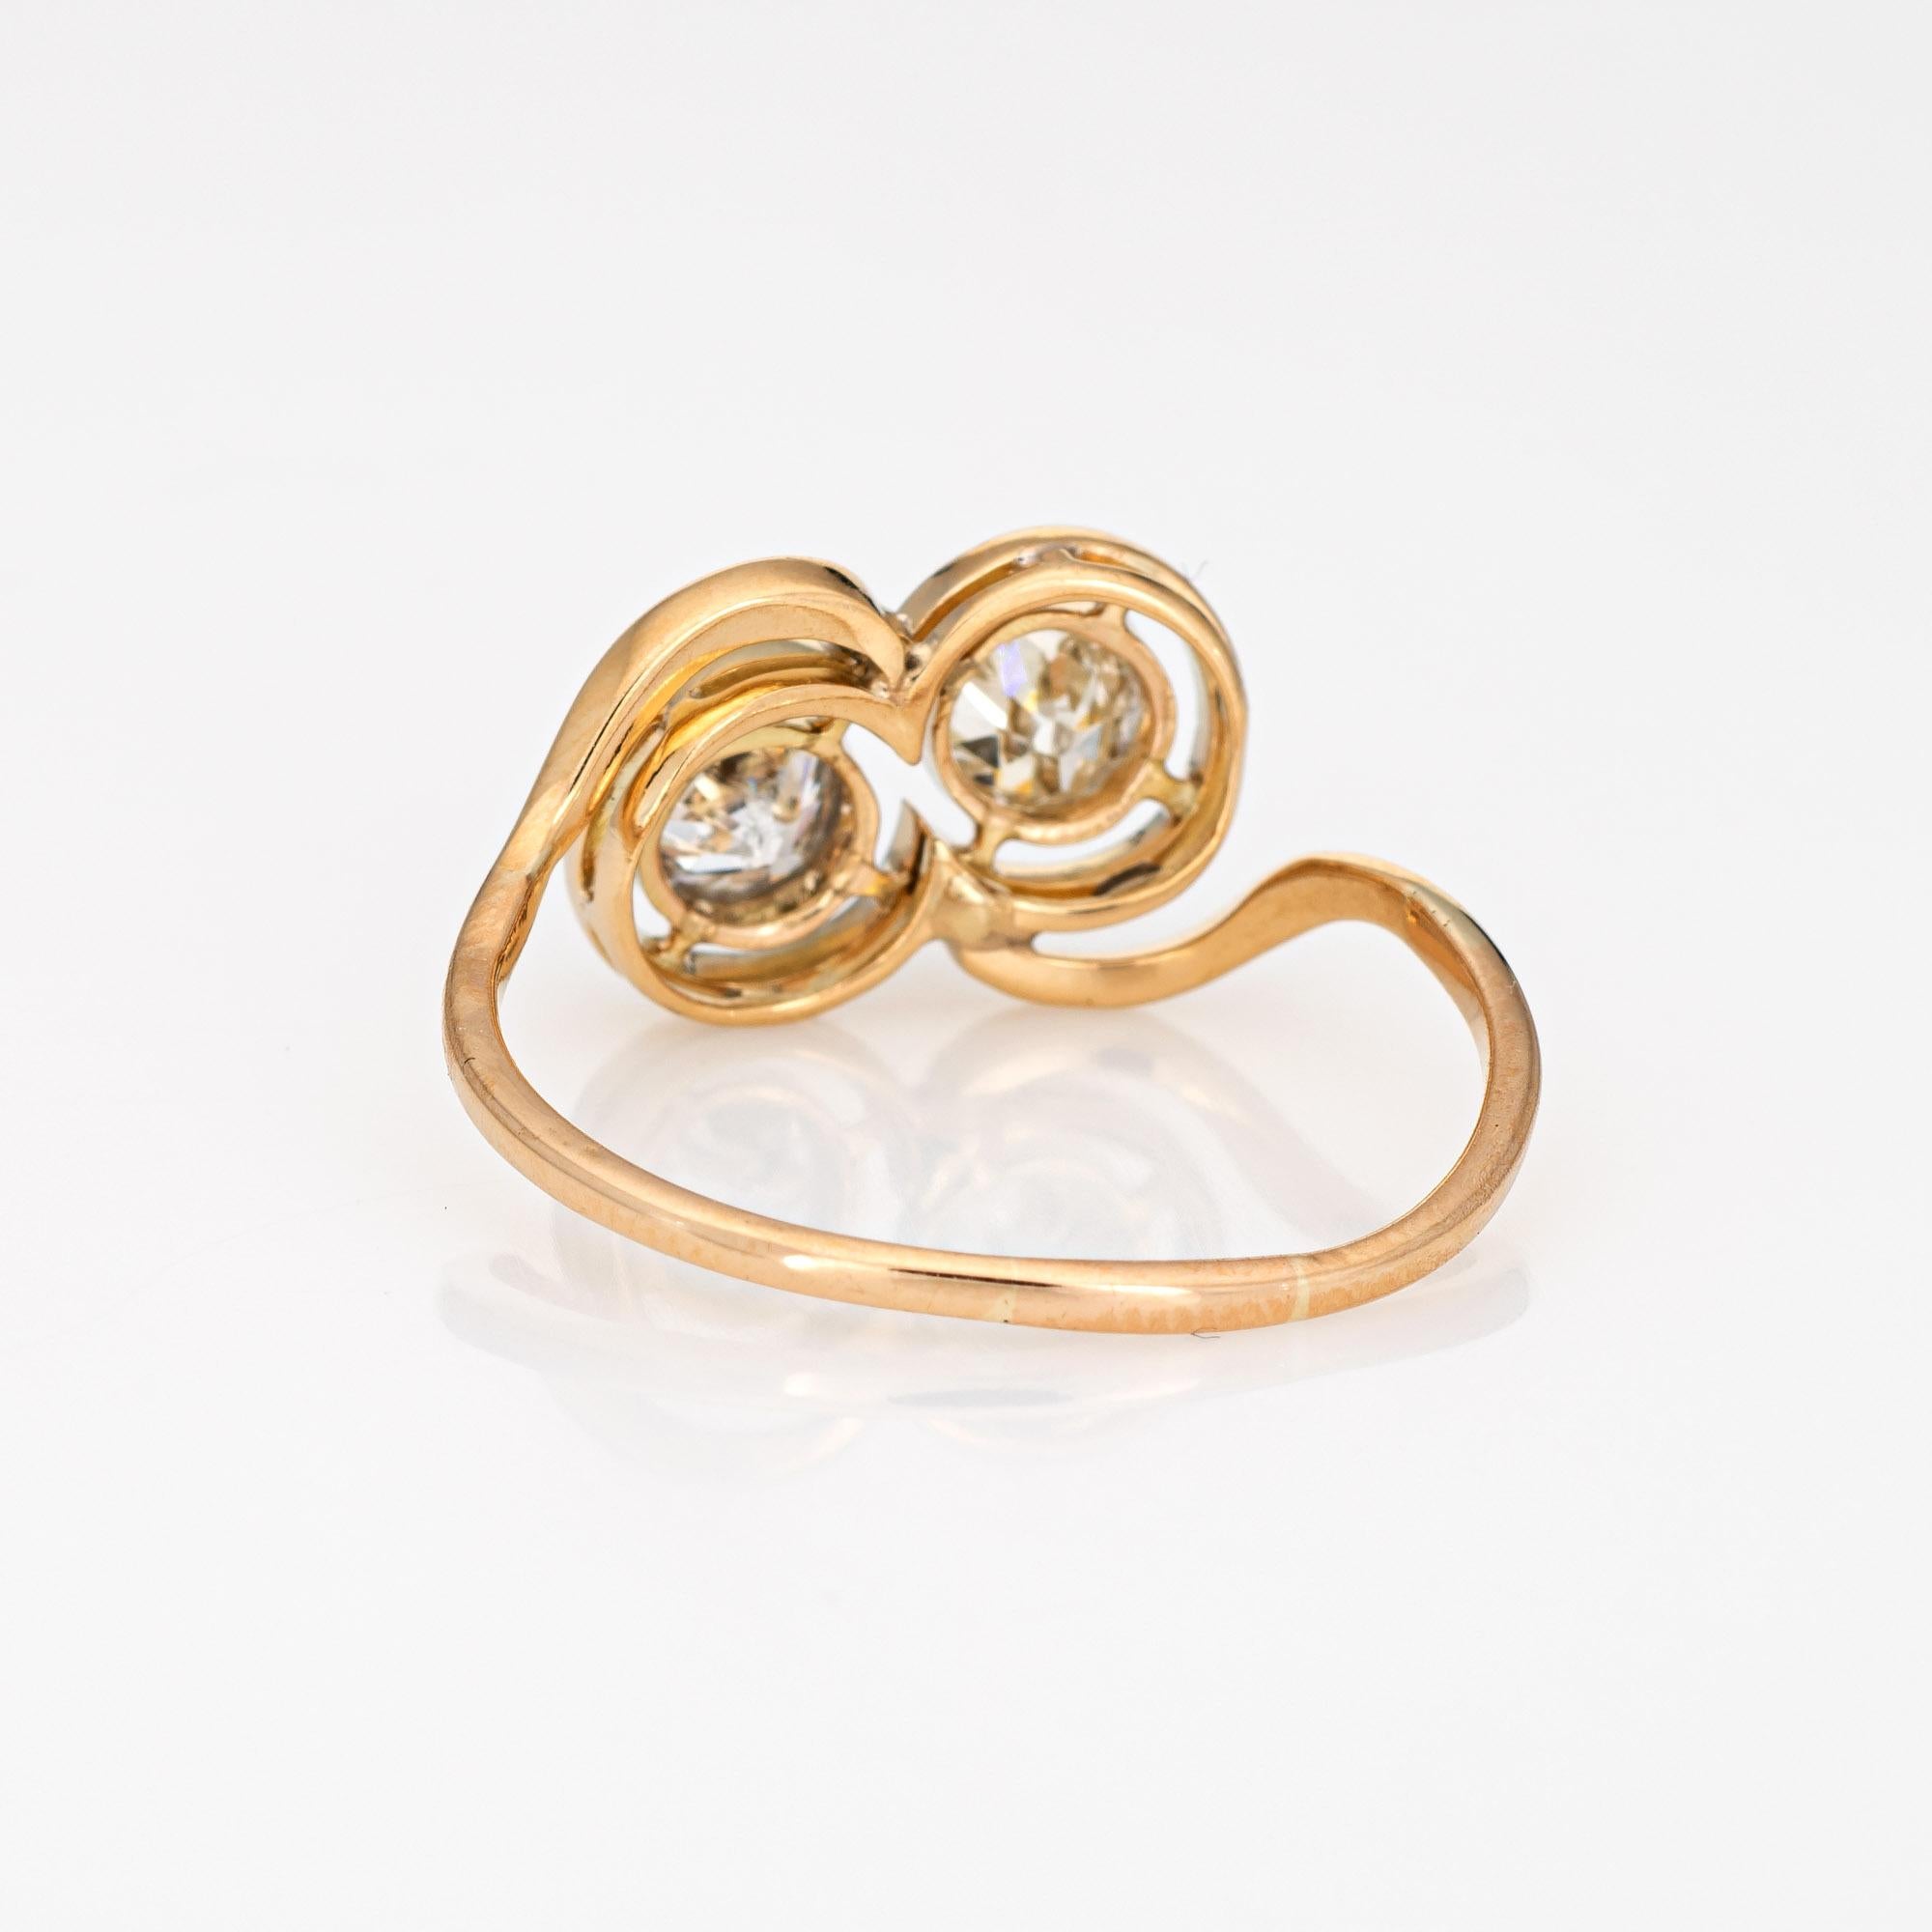 Vintage Art Deco Double Diamond Ring Toi et Moi Old Mine Cuts 14 Karat Gold 1